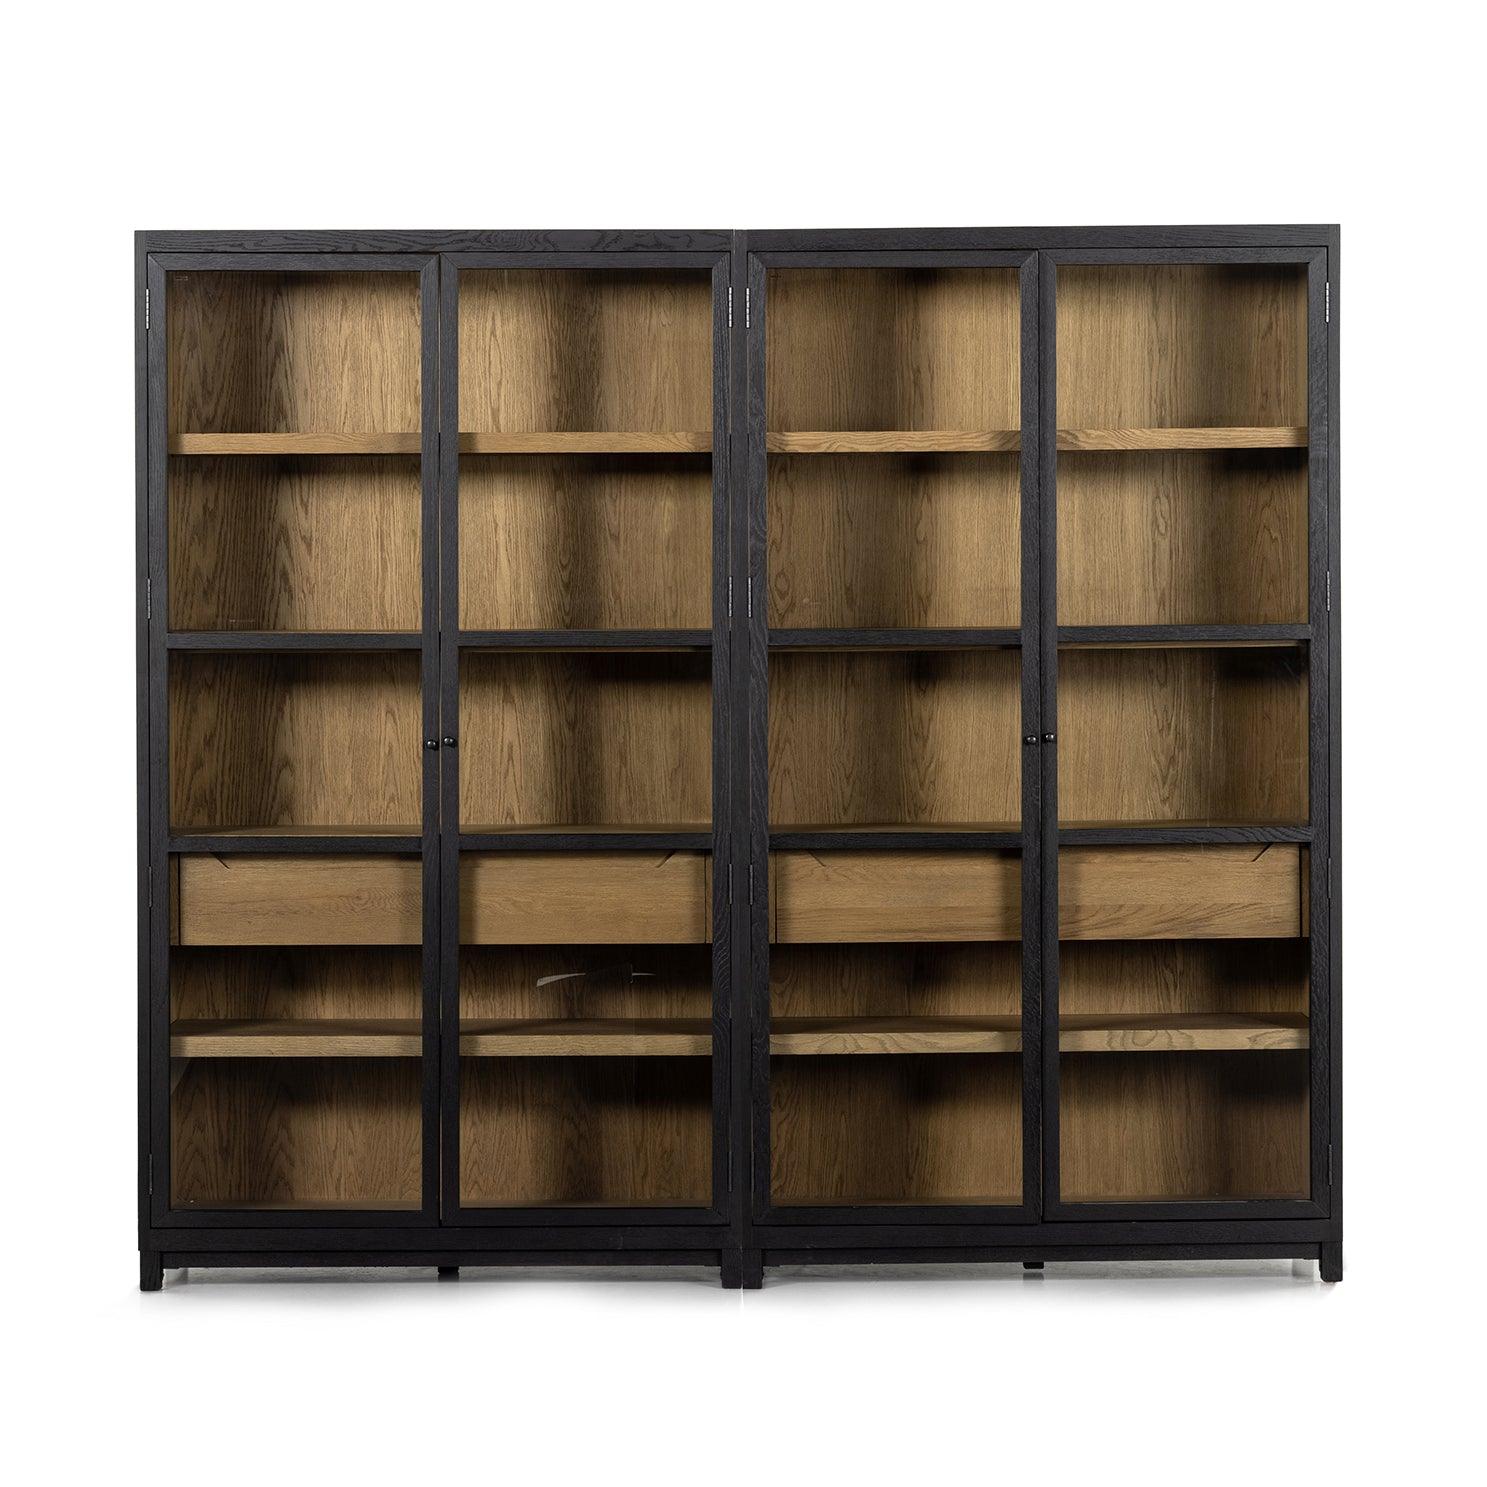 MILLIE DOUBLE CABINET - Reimagine Designs - Bookcases, cabinet, new